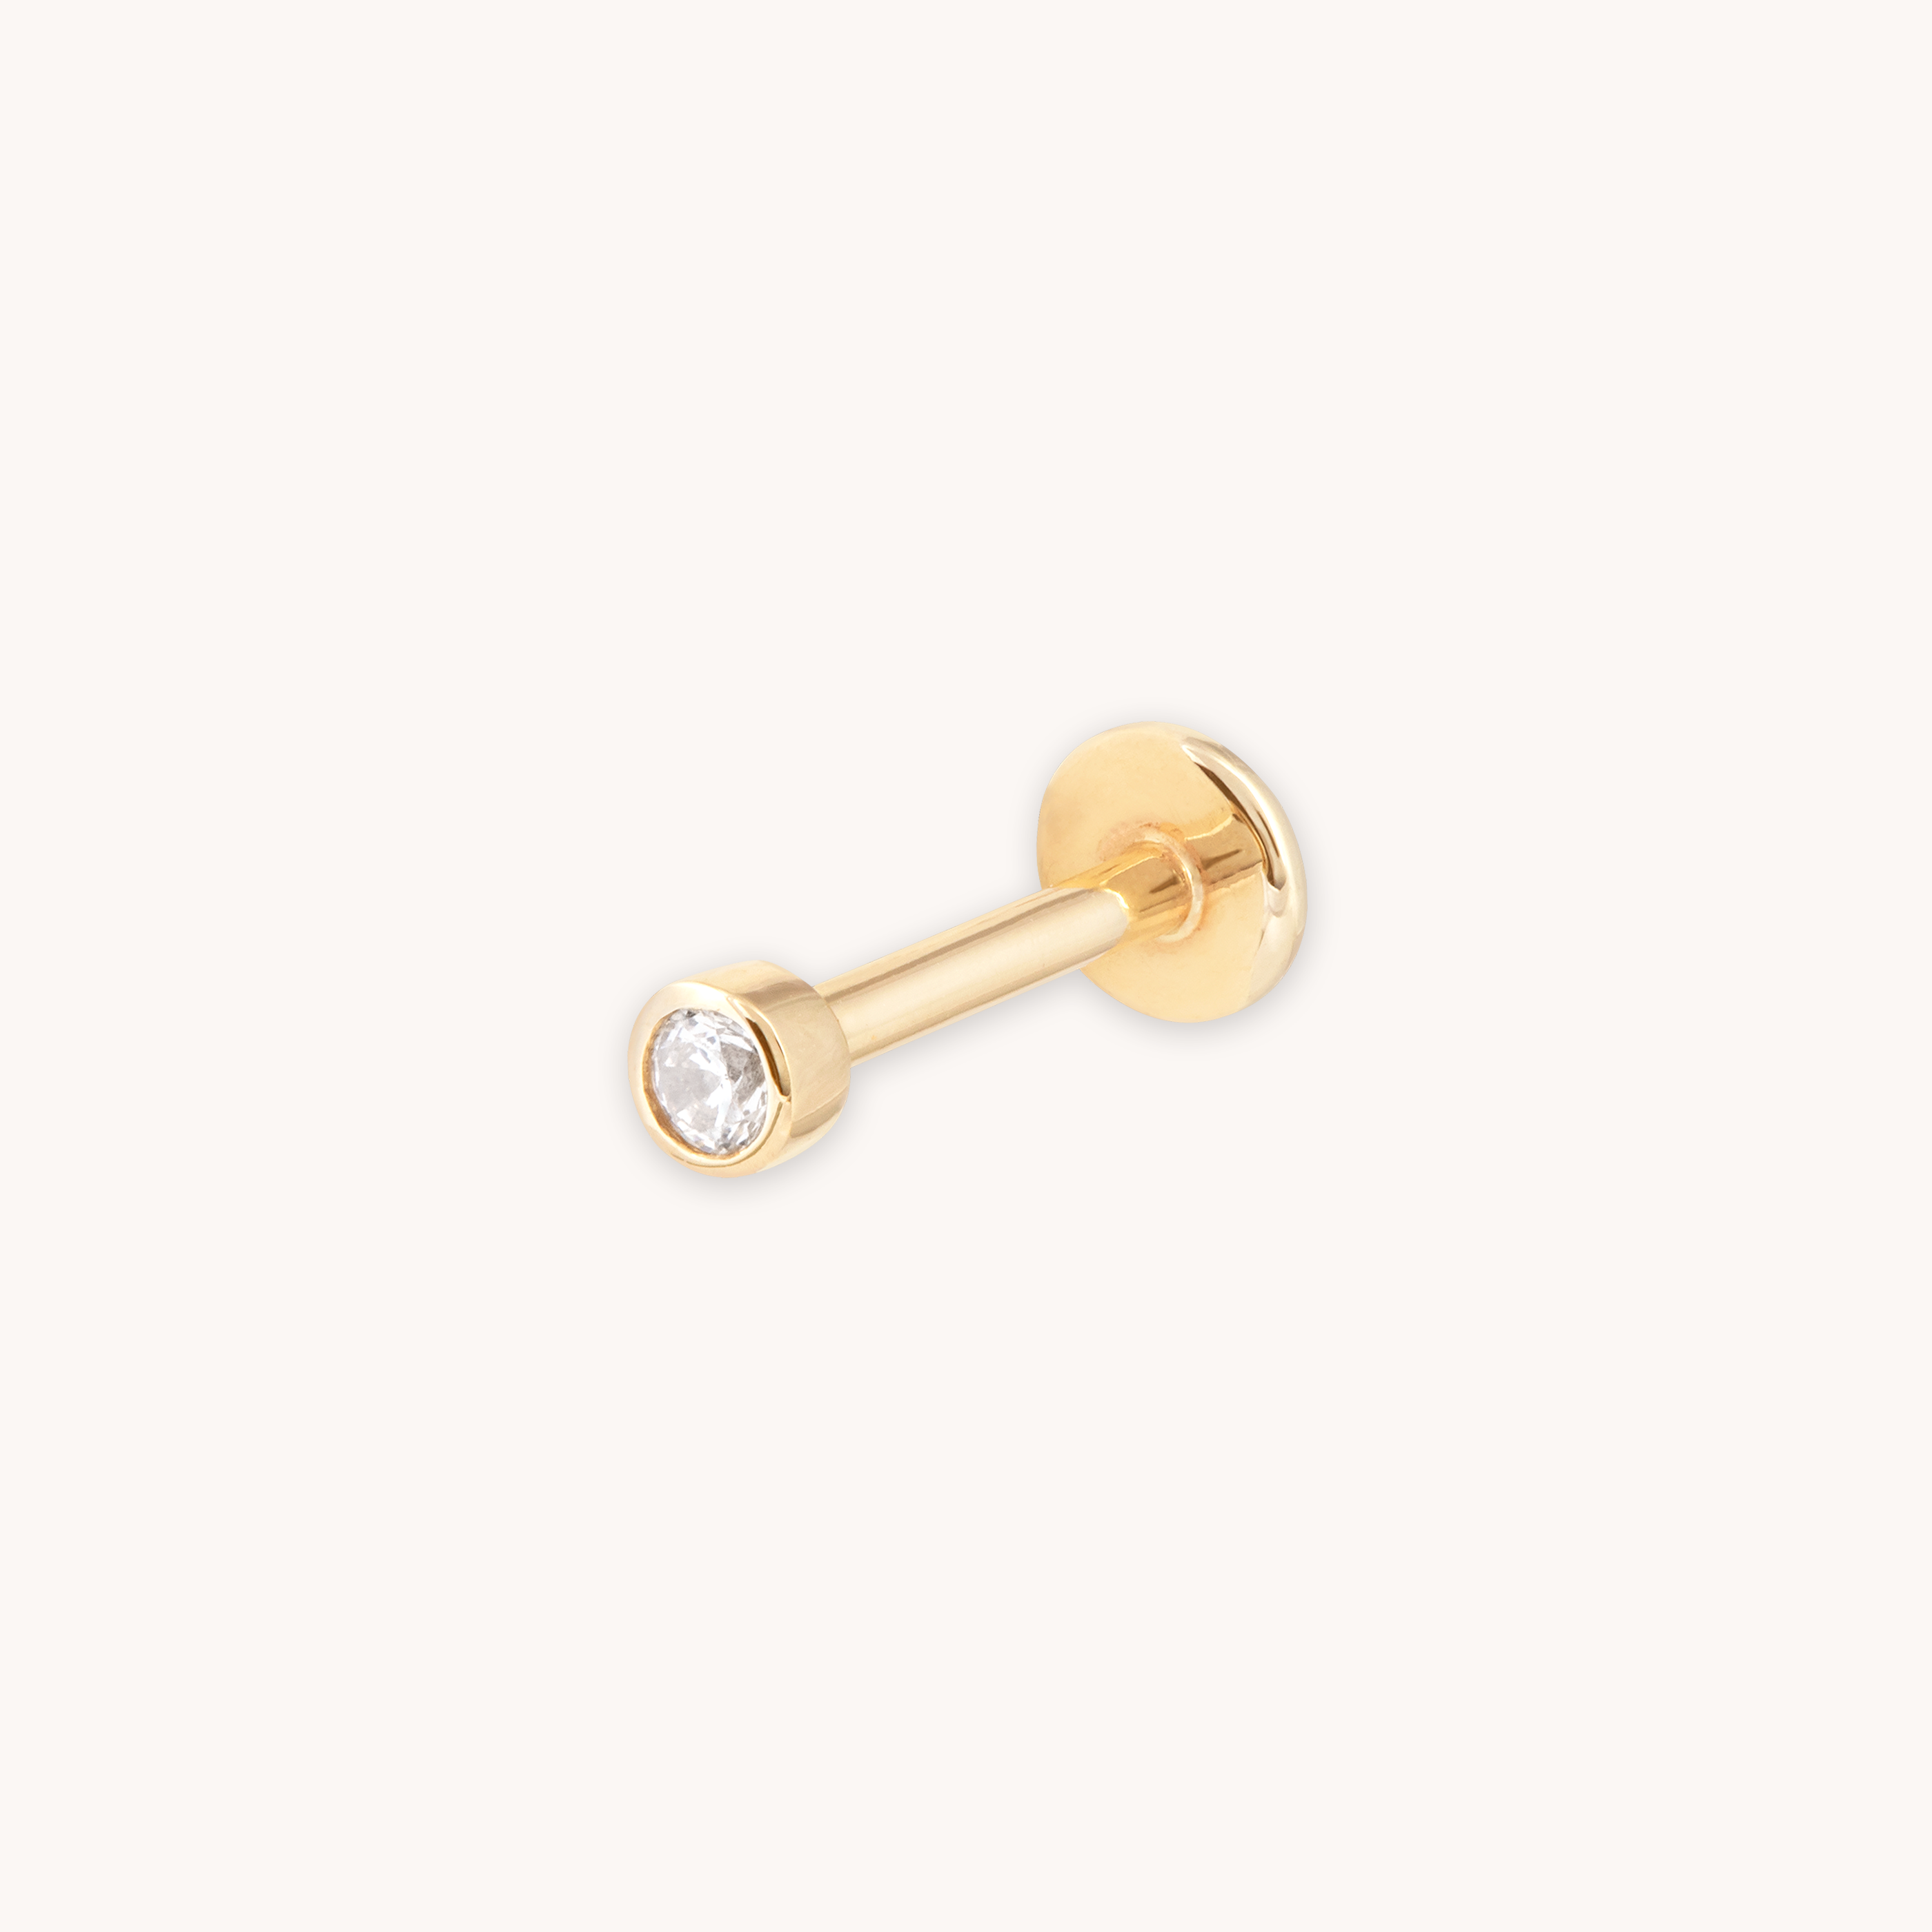 Topaz Gem Piercing Stud in Solid Gold | Astrid & Miyu Earrings